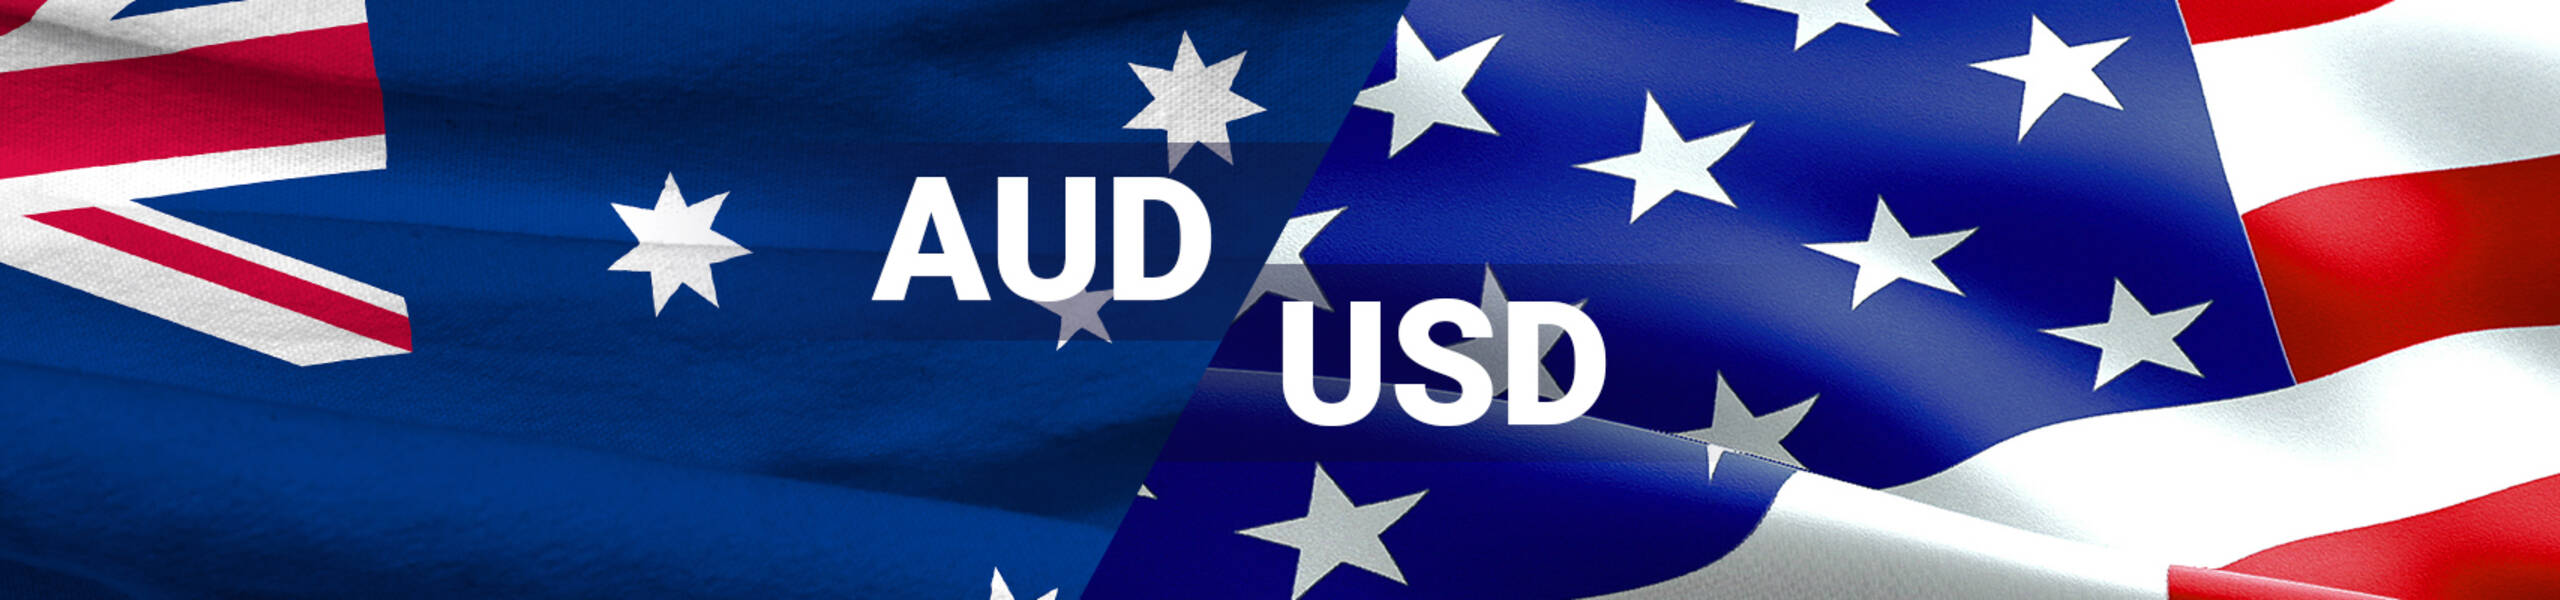 Datos de Empleo de Australia impulsan el par AUD/USD